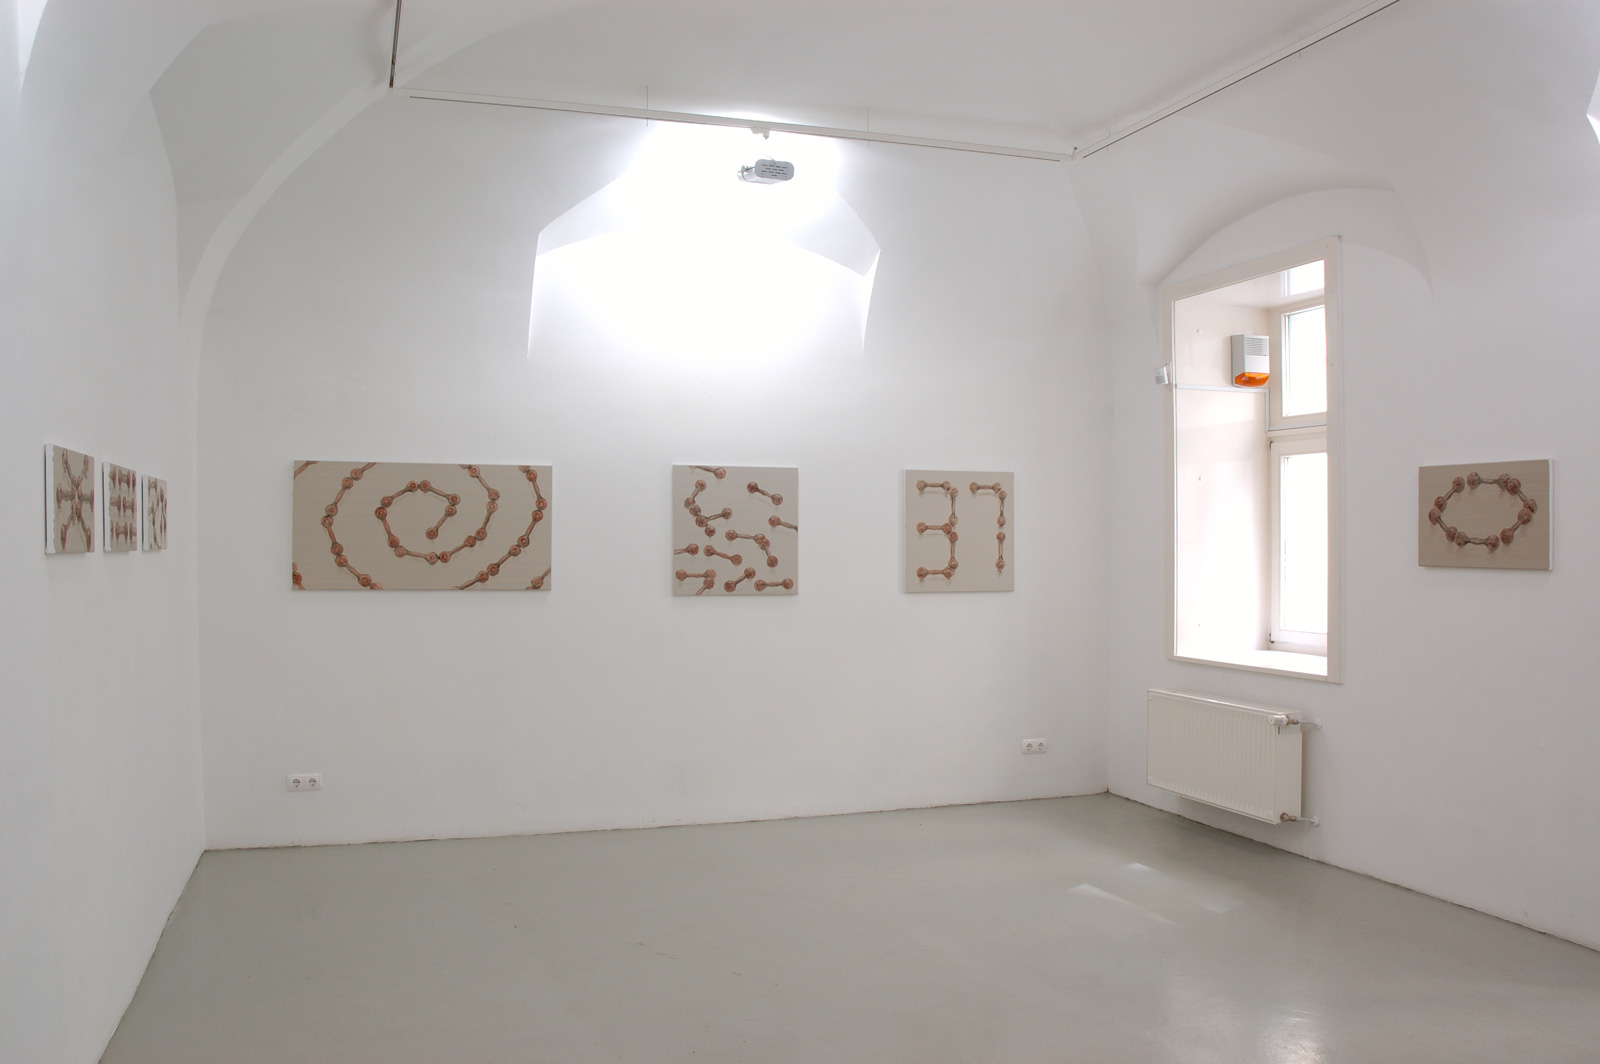 Installation view with works of Katalin KÁLDI, Kisterem, 2008